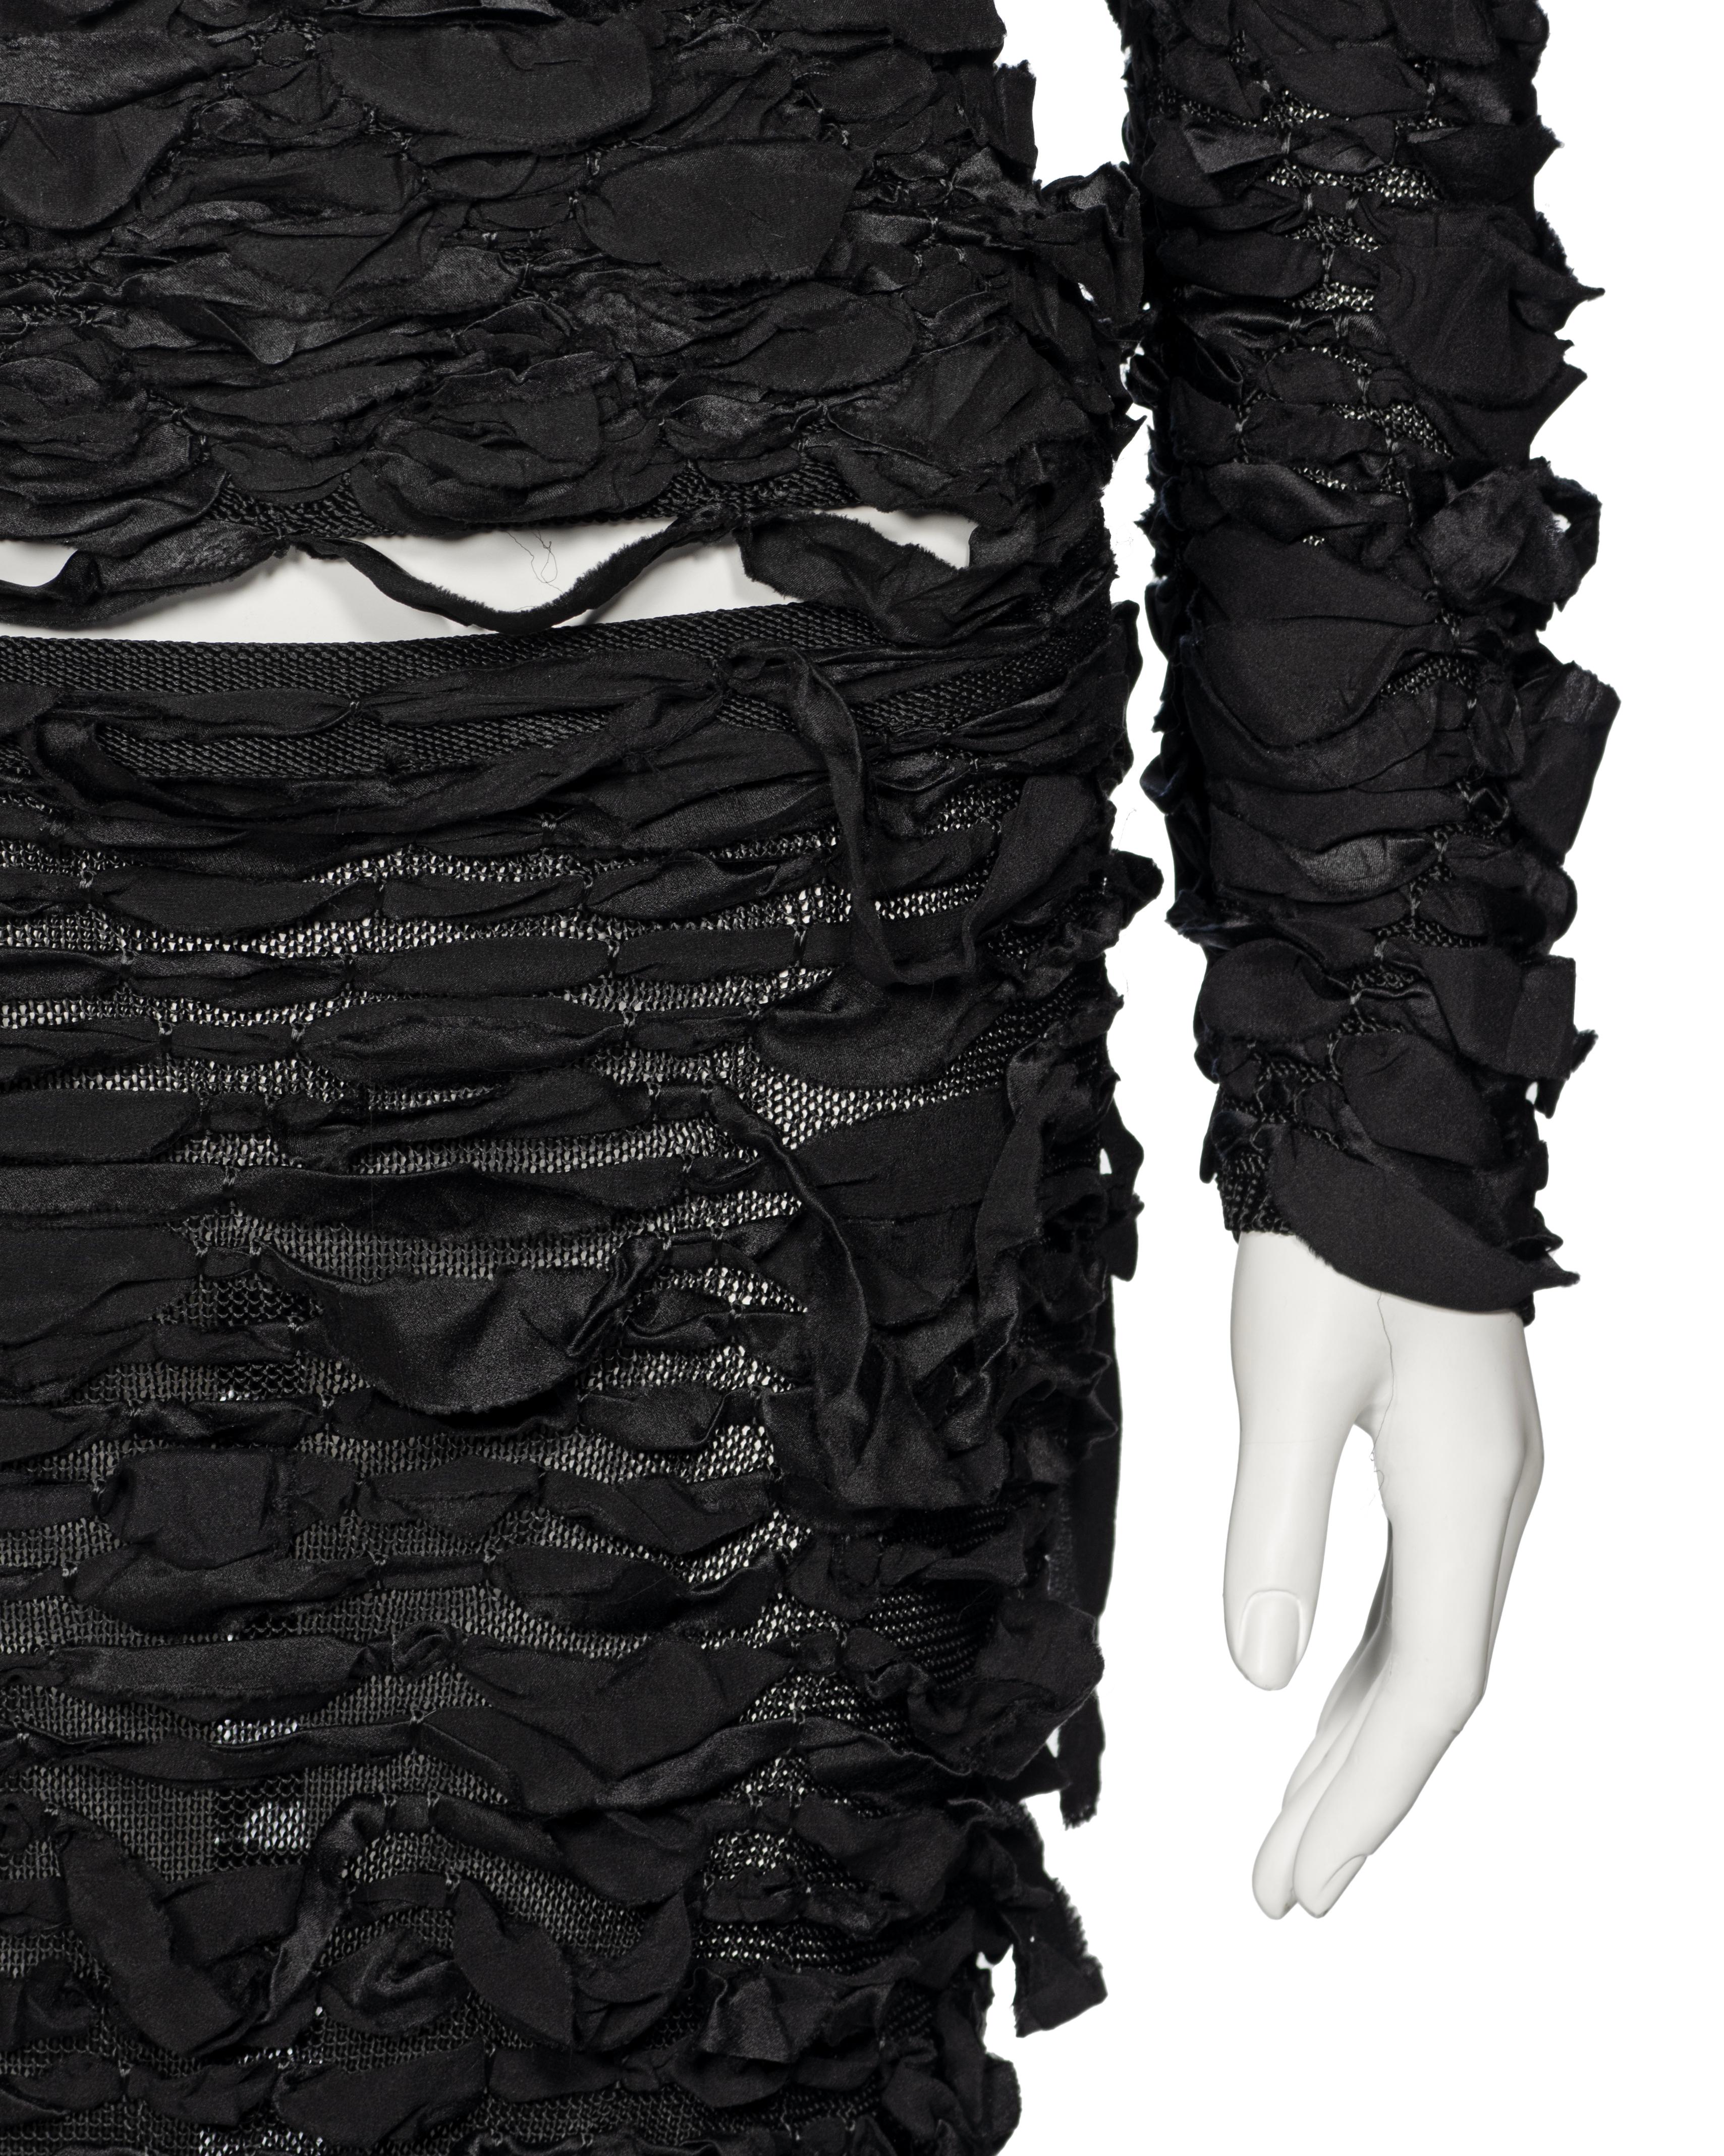 Yves Saint Laurent by Tom Ford black shredded silk ribbon top and skirt, fw 2001 For Sale 1